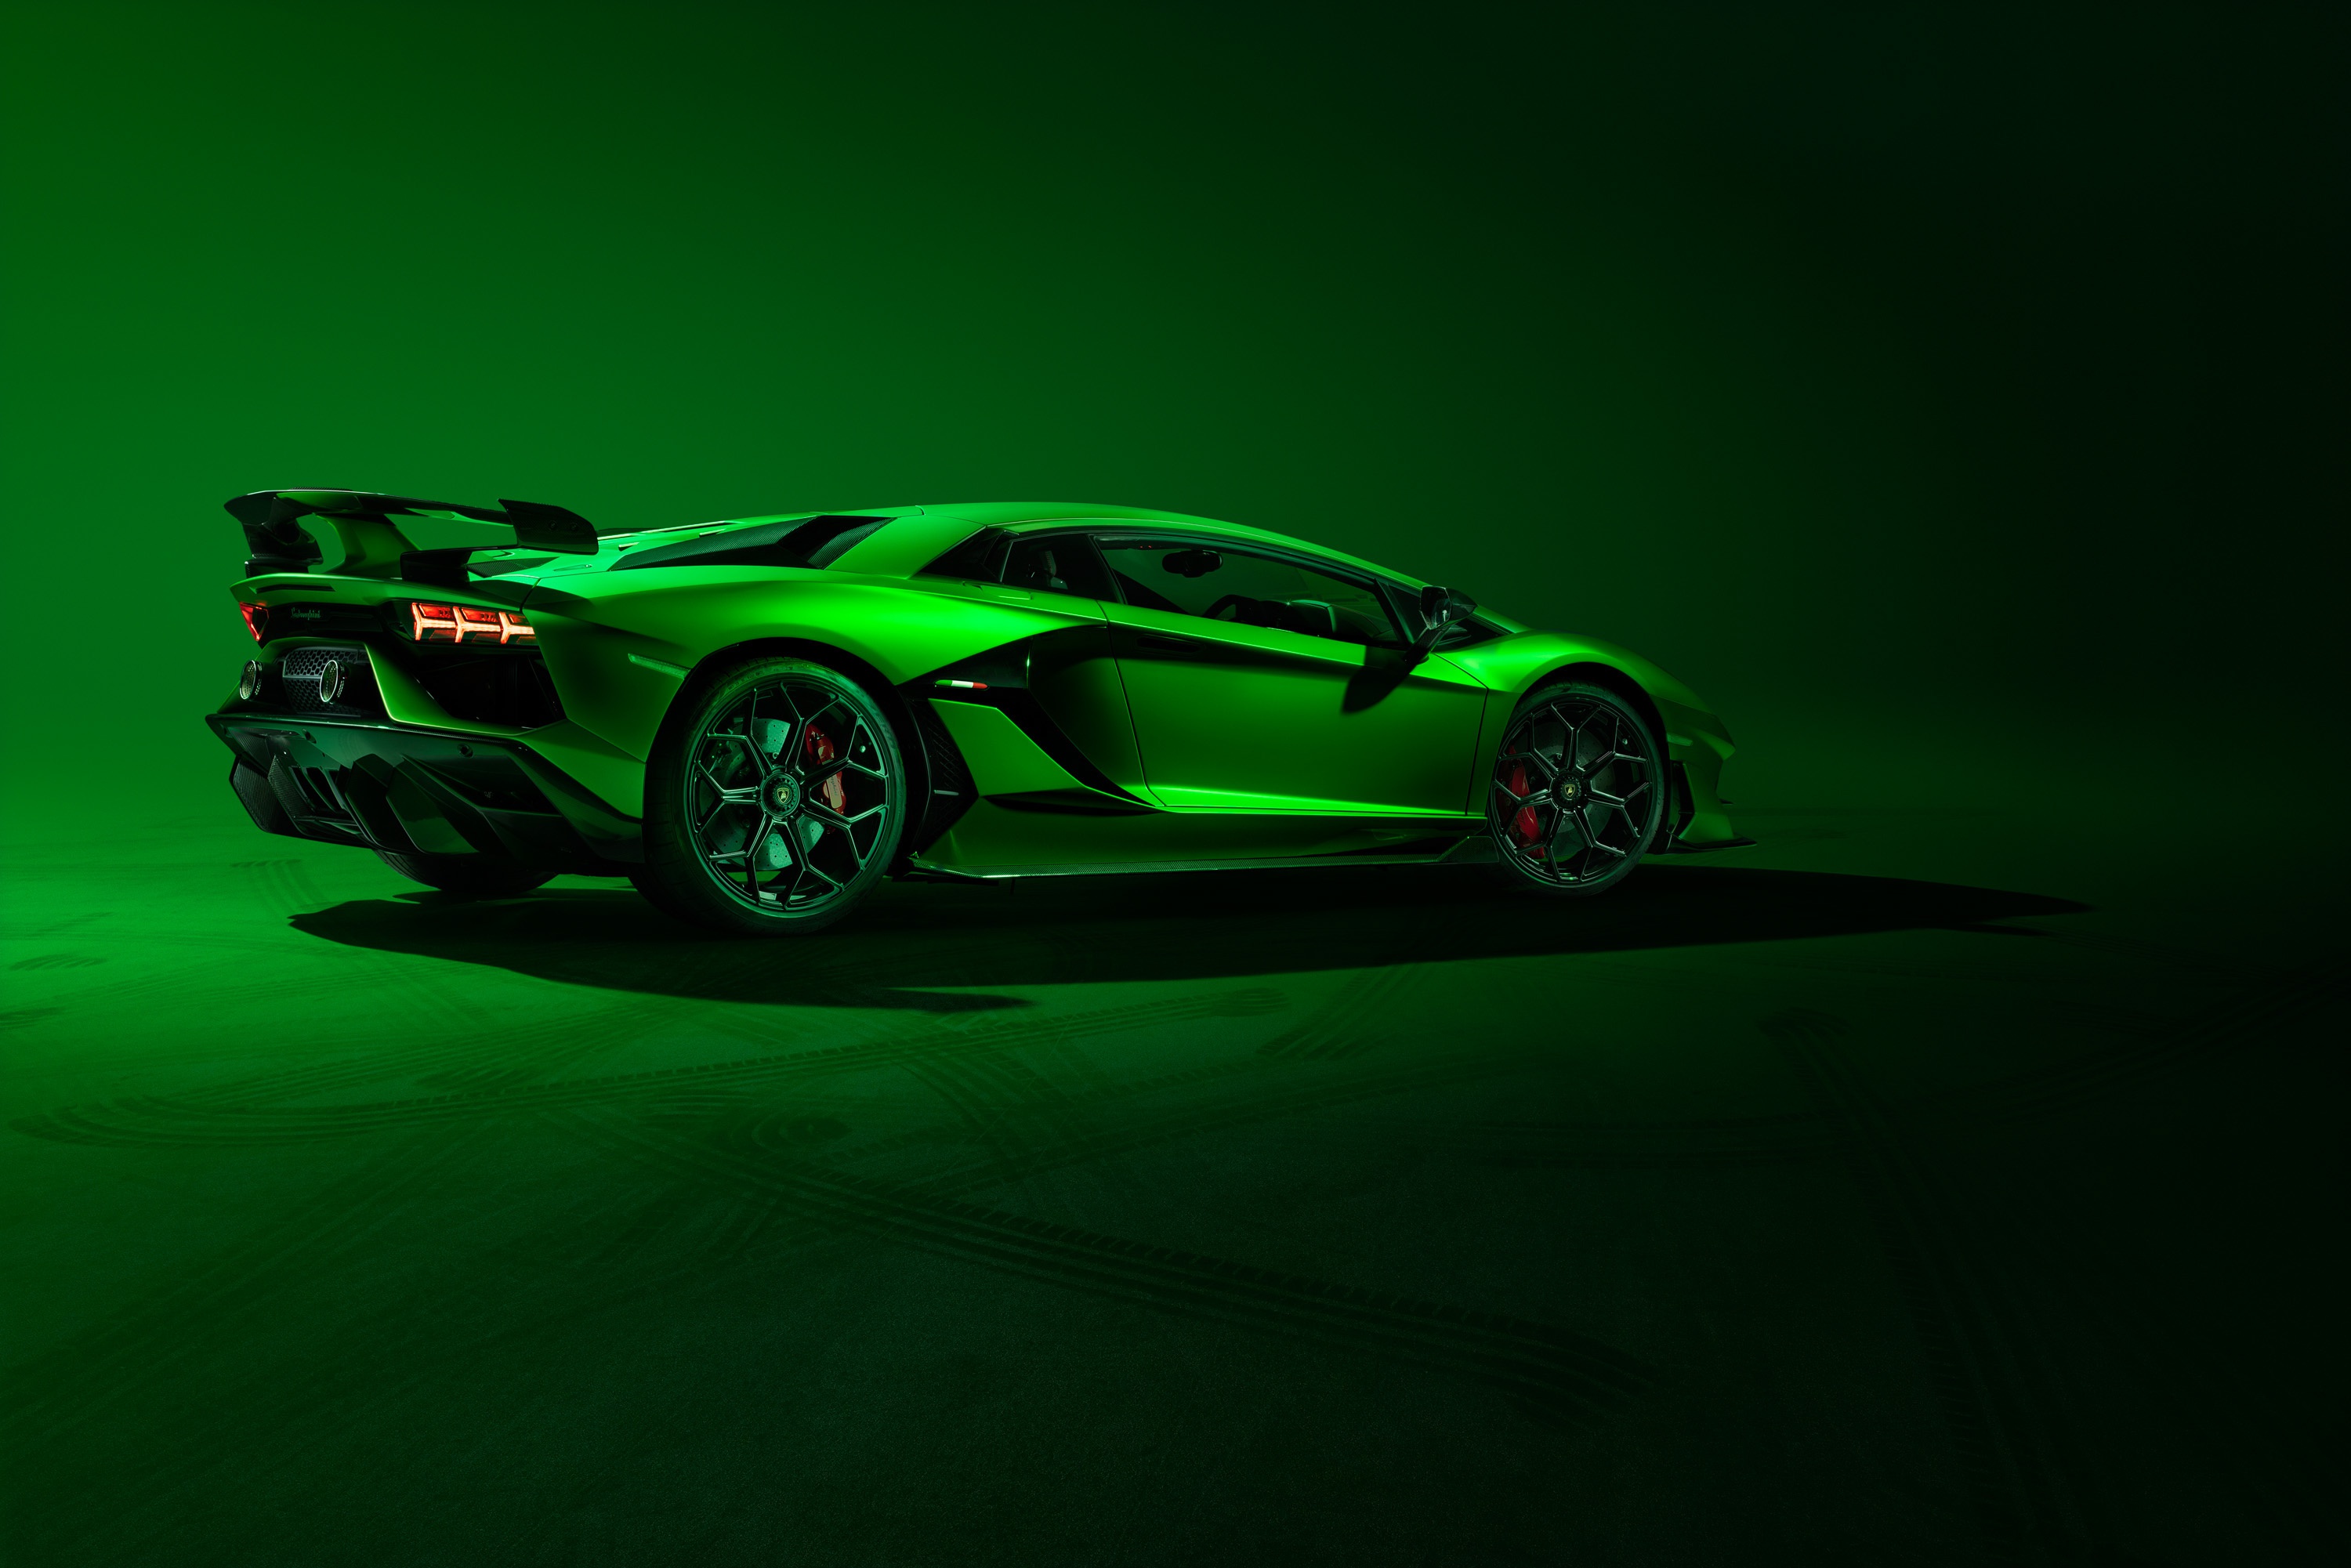 Baixe gratuitamente a imagem Lamborghini, Carro, Super Carro, Lamborghini Aventador, Veículos, Carro Verde, Lamborghini Aventador Svj na área de trabalho do seu PC